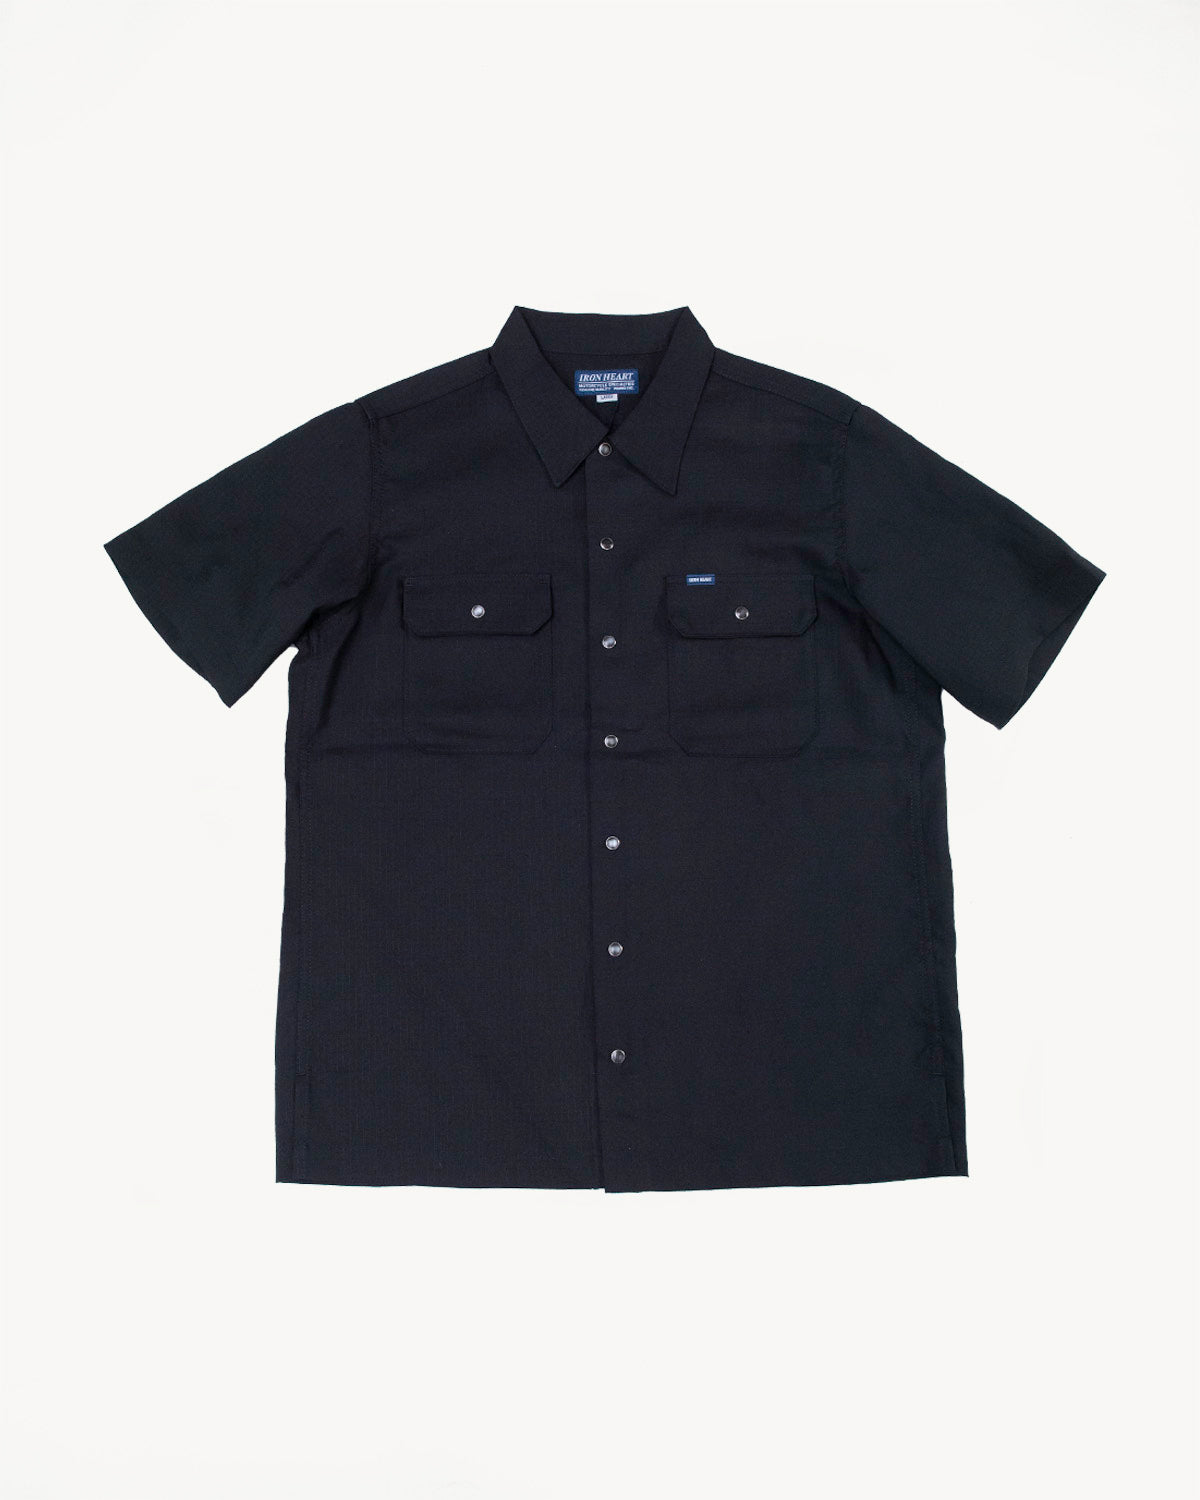 IHSH-286-BLK - Ripstop Short Sleeved Mechanic Shirt - Black